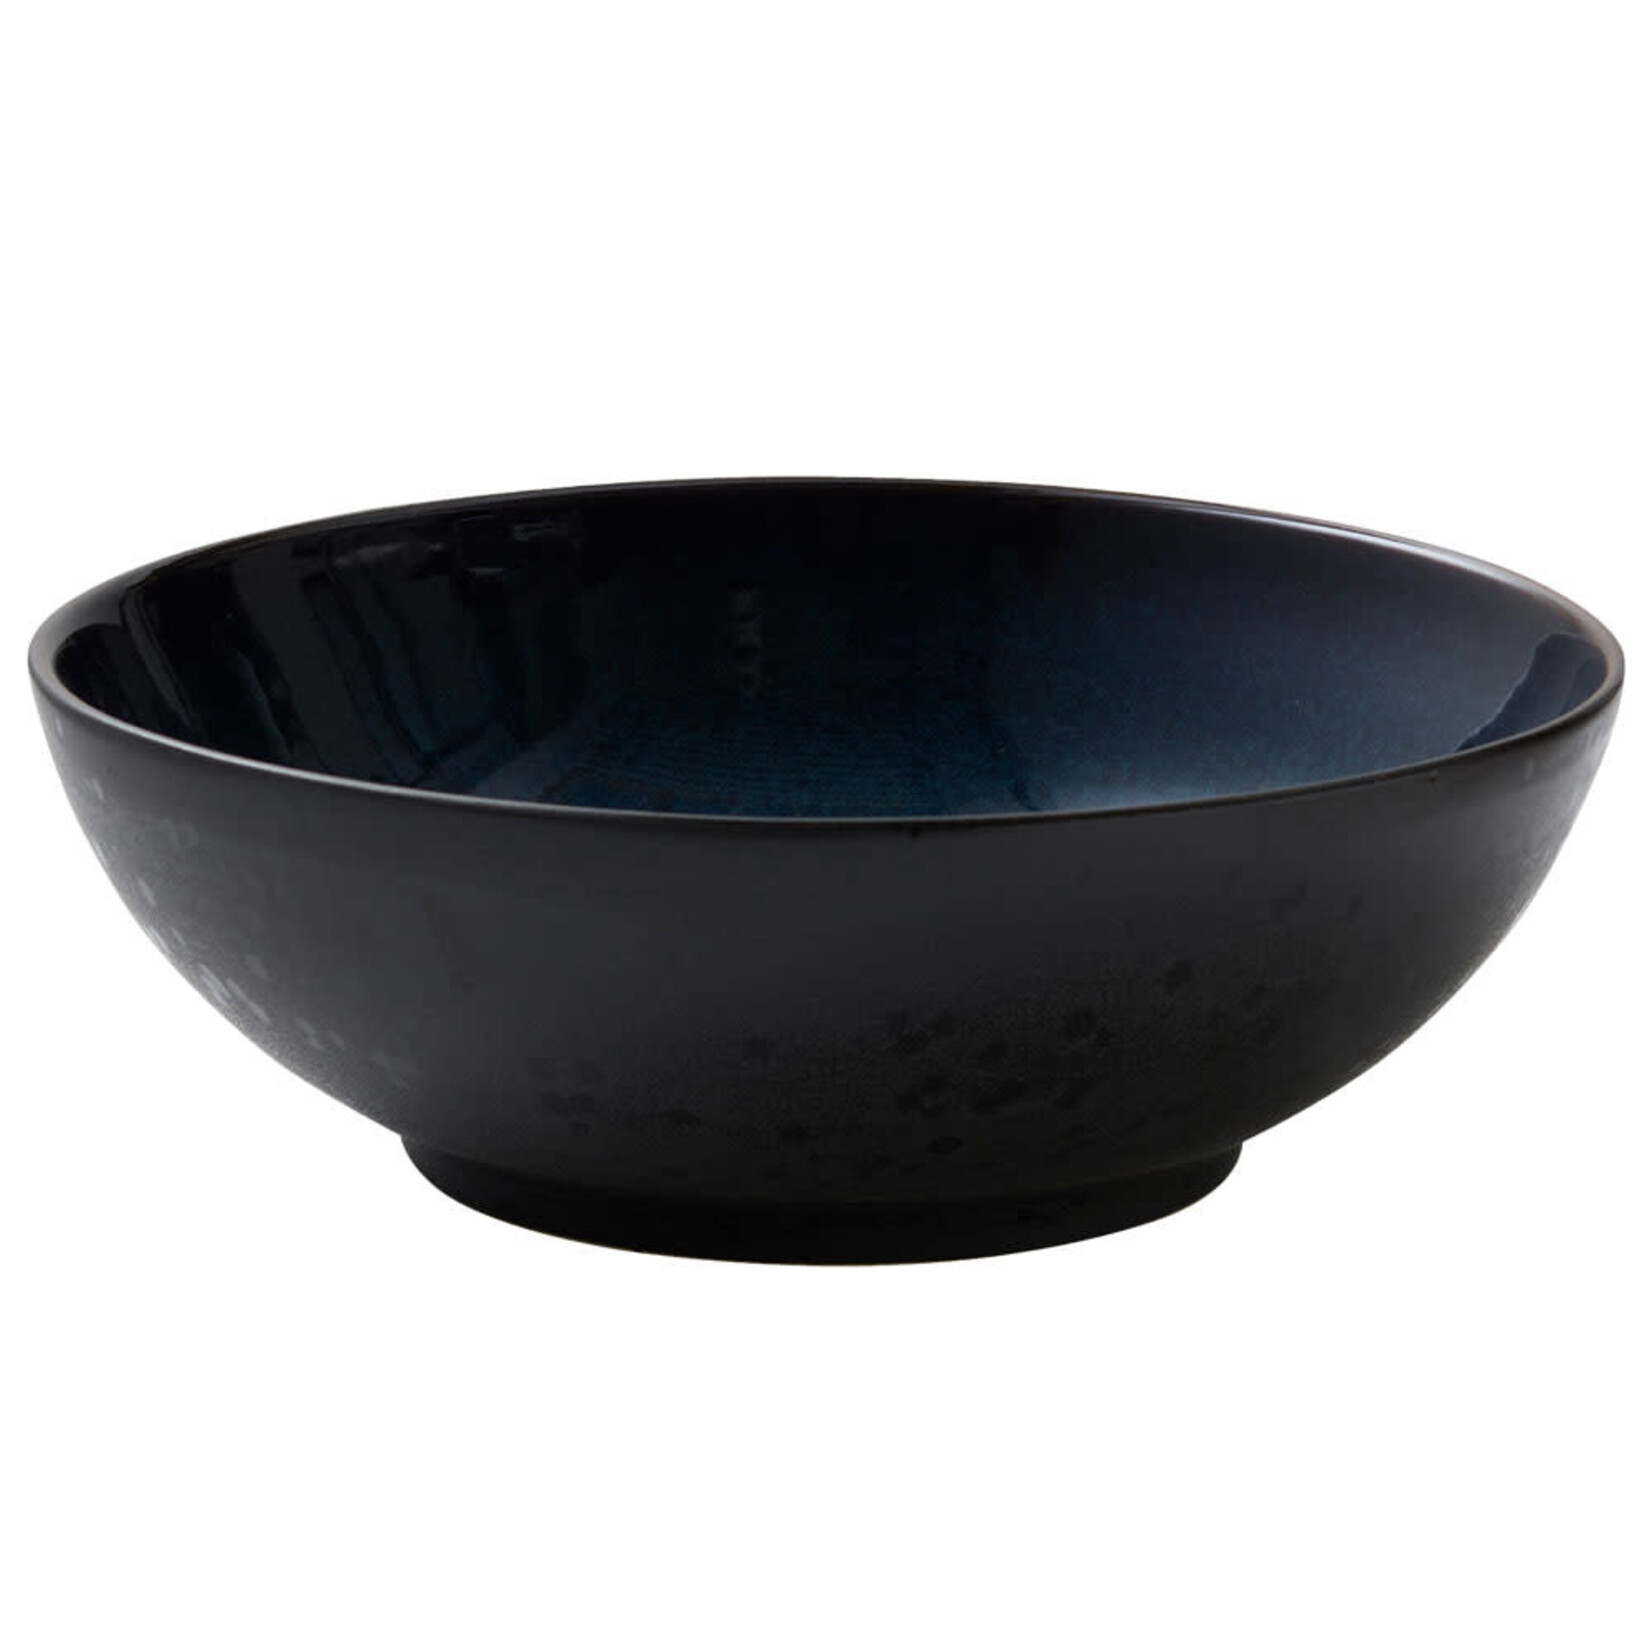 Bitz 20 cm Pasta bowl black dark blue Bitz Pasta bowl 20 cm black dark blue Bitz 11193